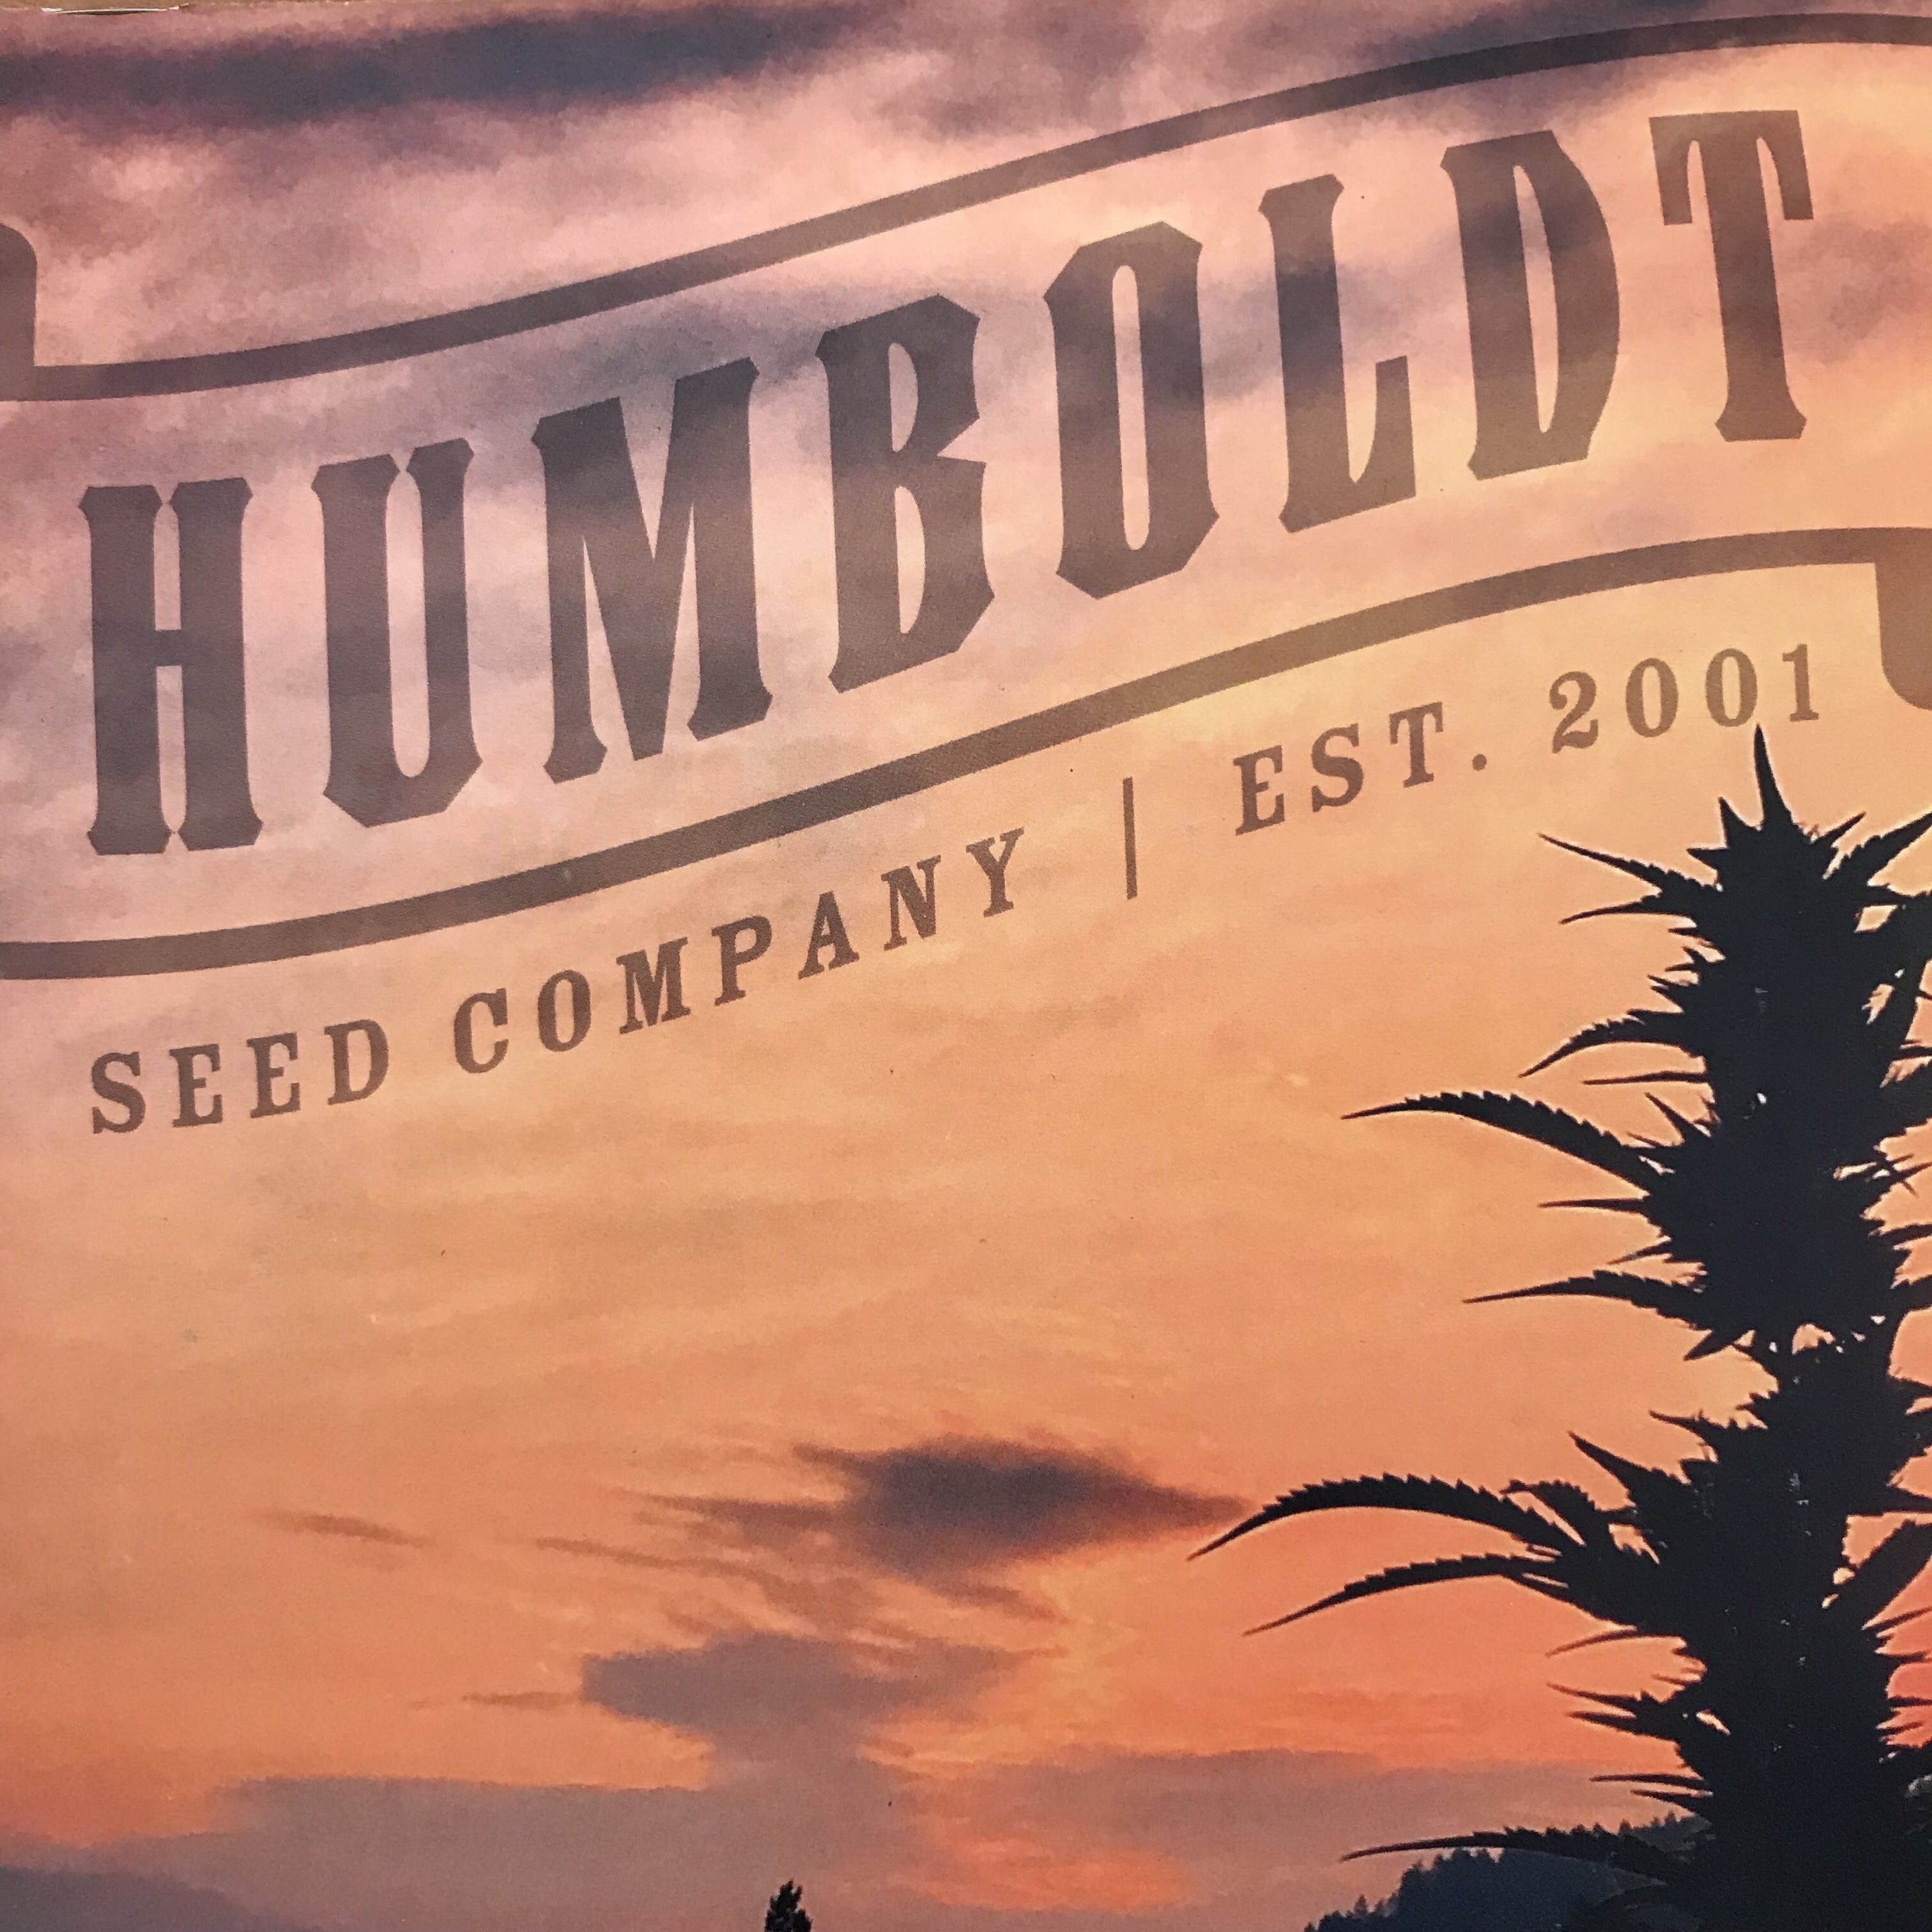 Humboldt Seed Company - Seeds